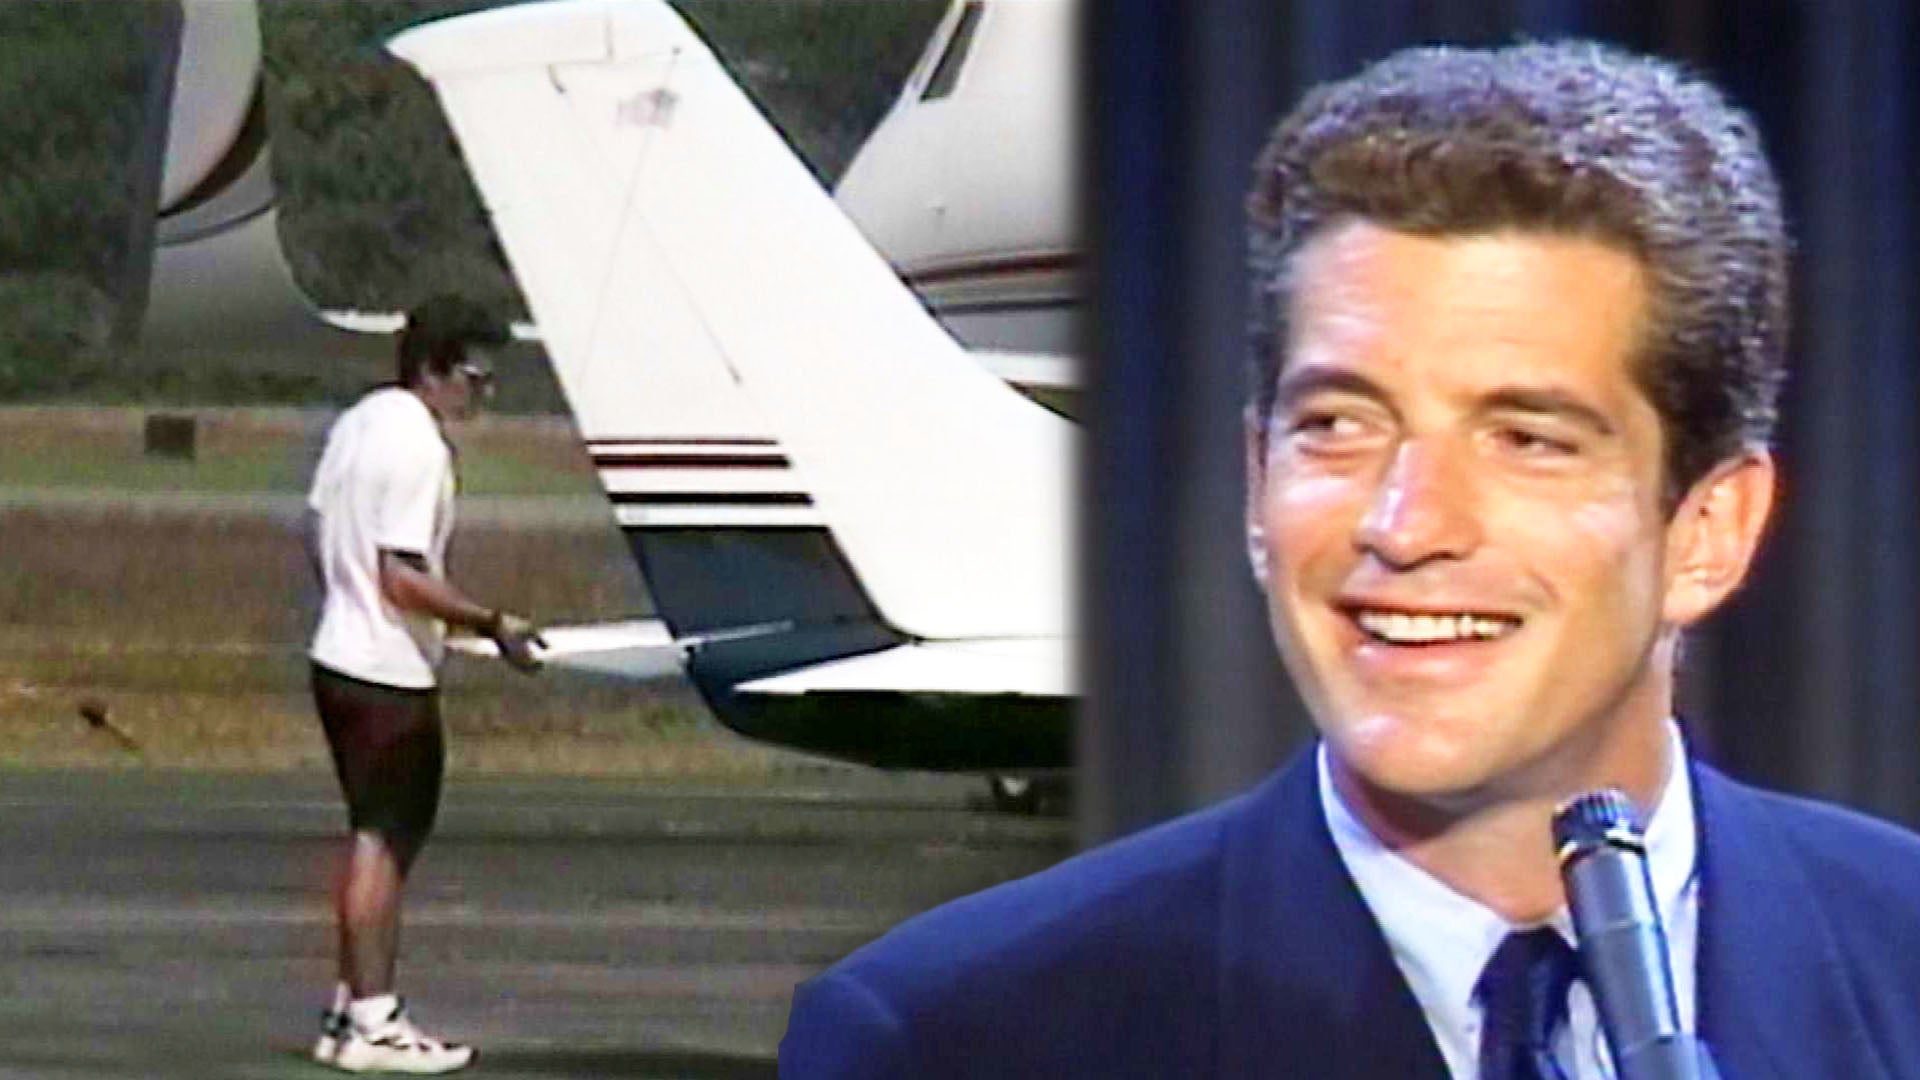 JFK Jr. inspecting plane on tarmac / JFK Jr. smiling at a press conference